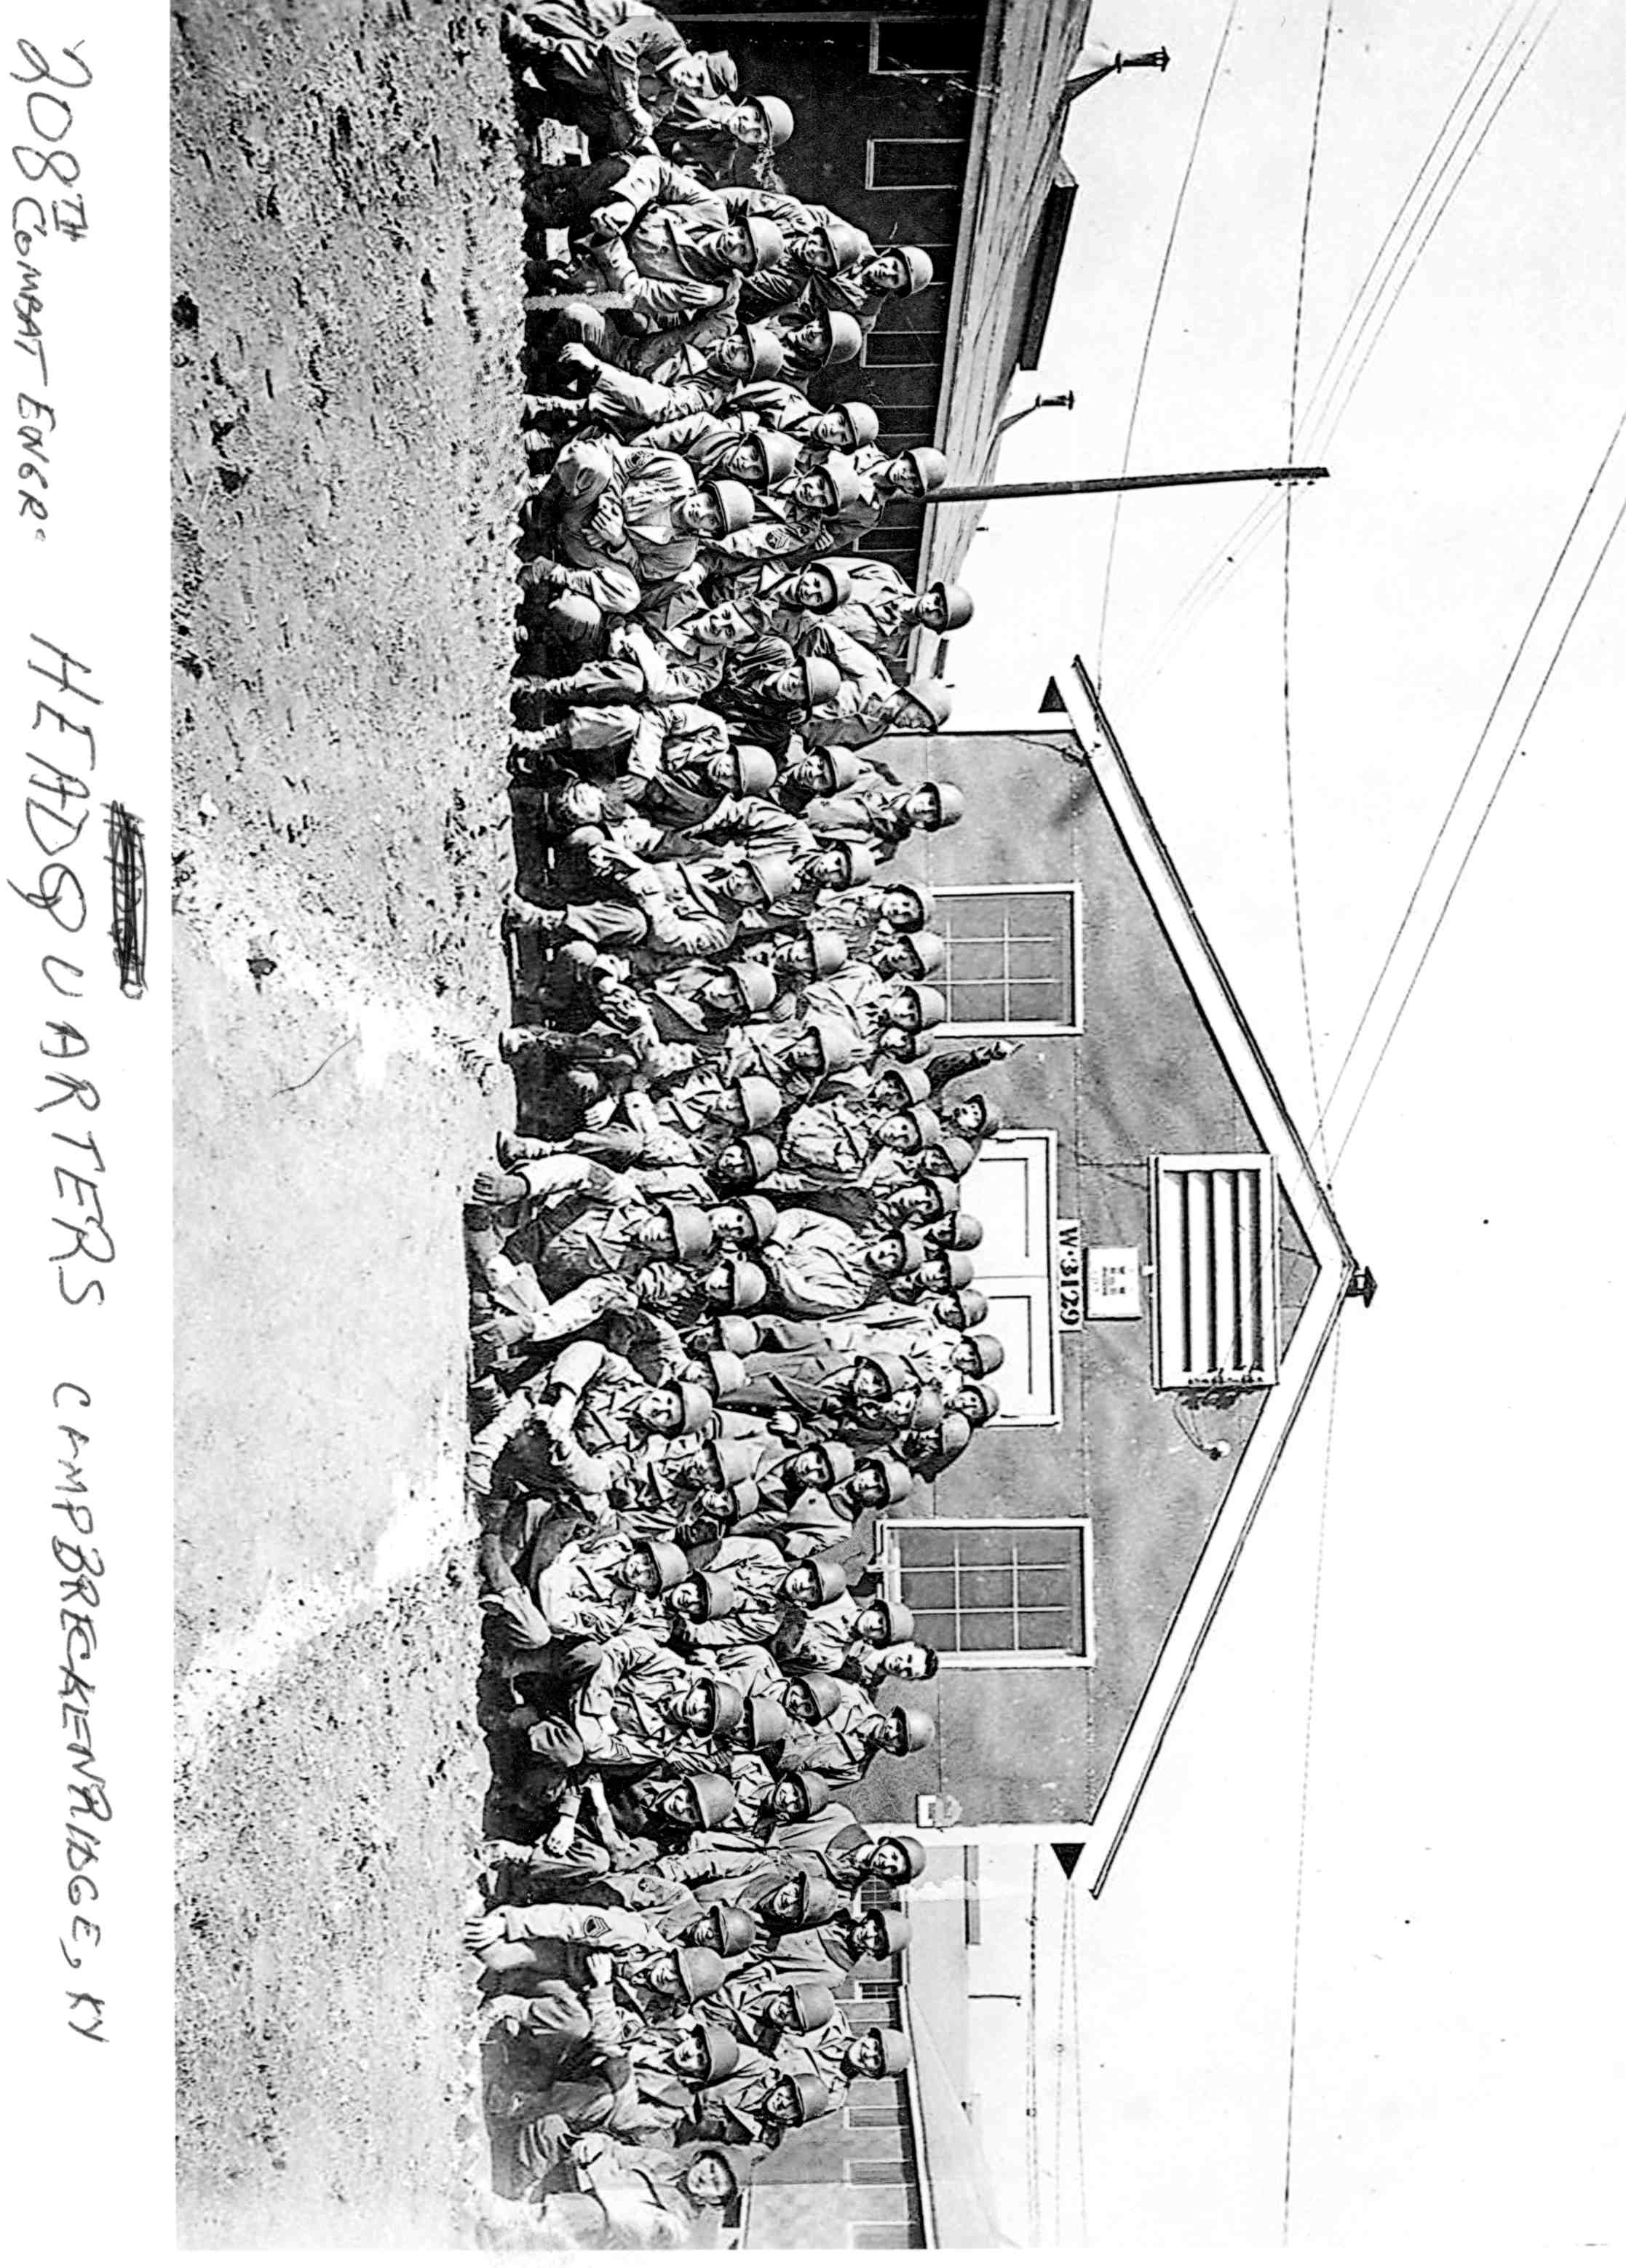 Camp Breckenridge KY - 208th Combat Engineers047